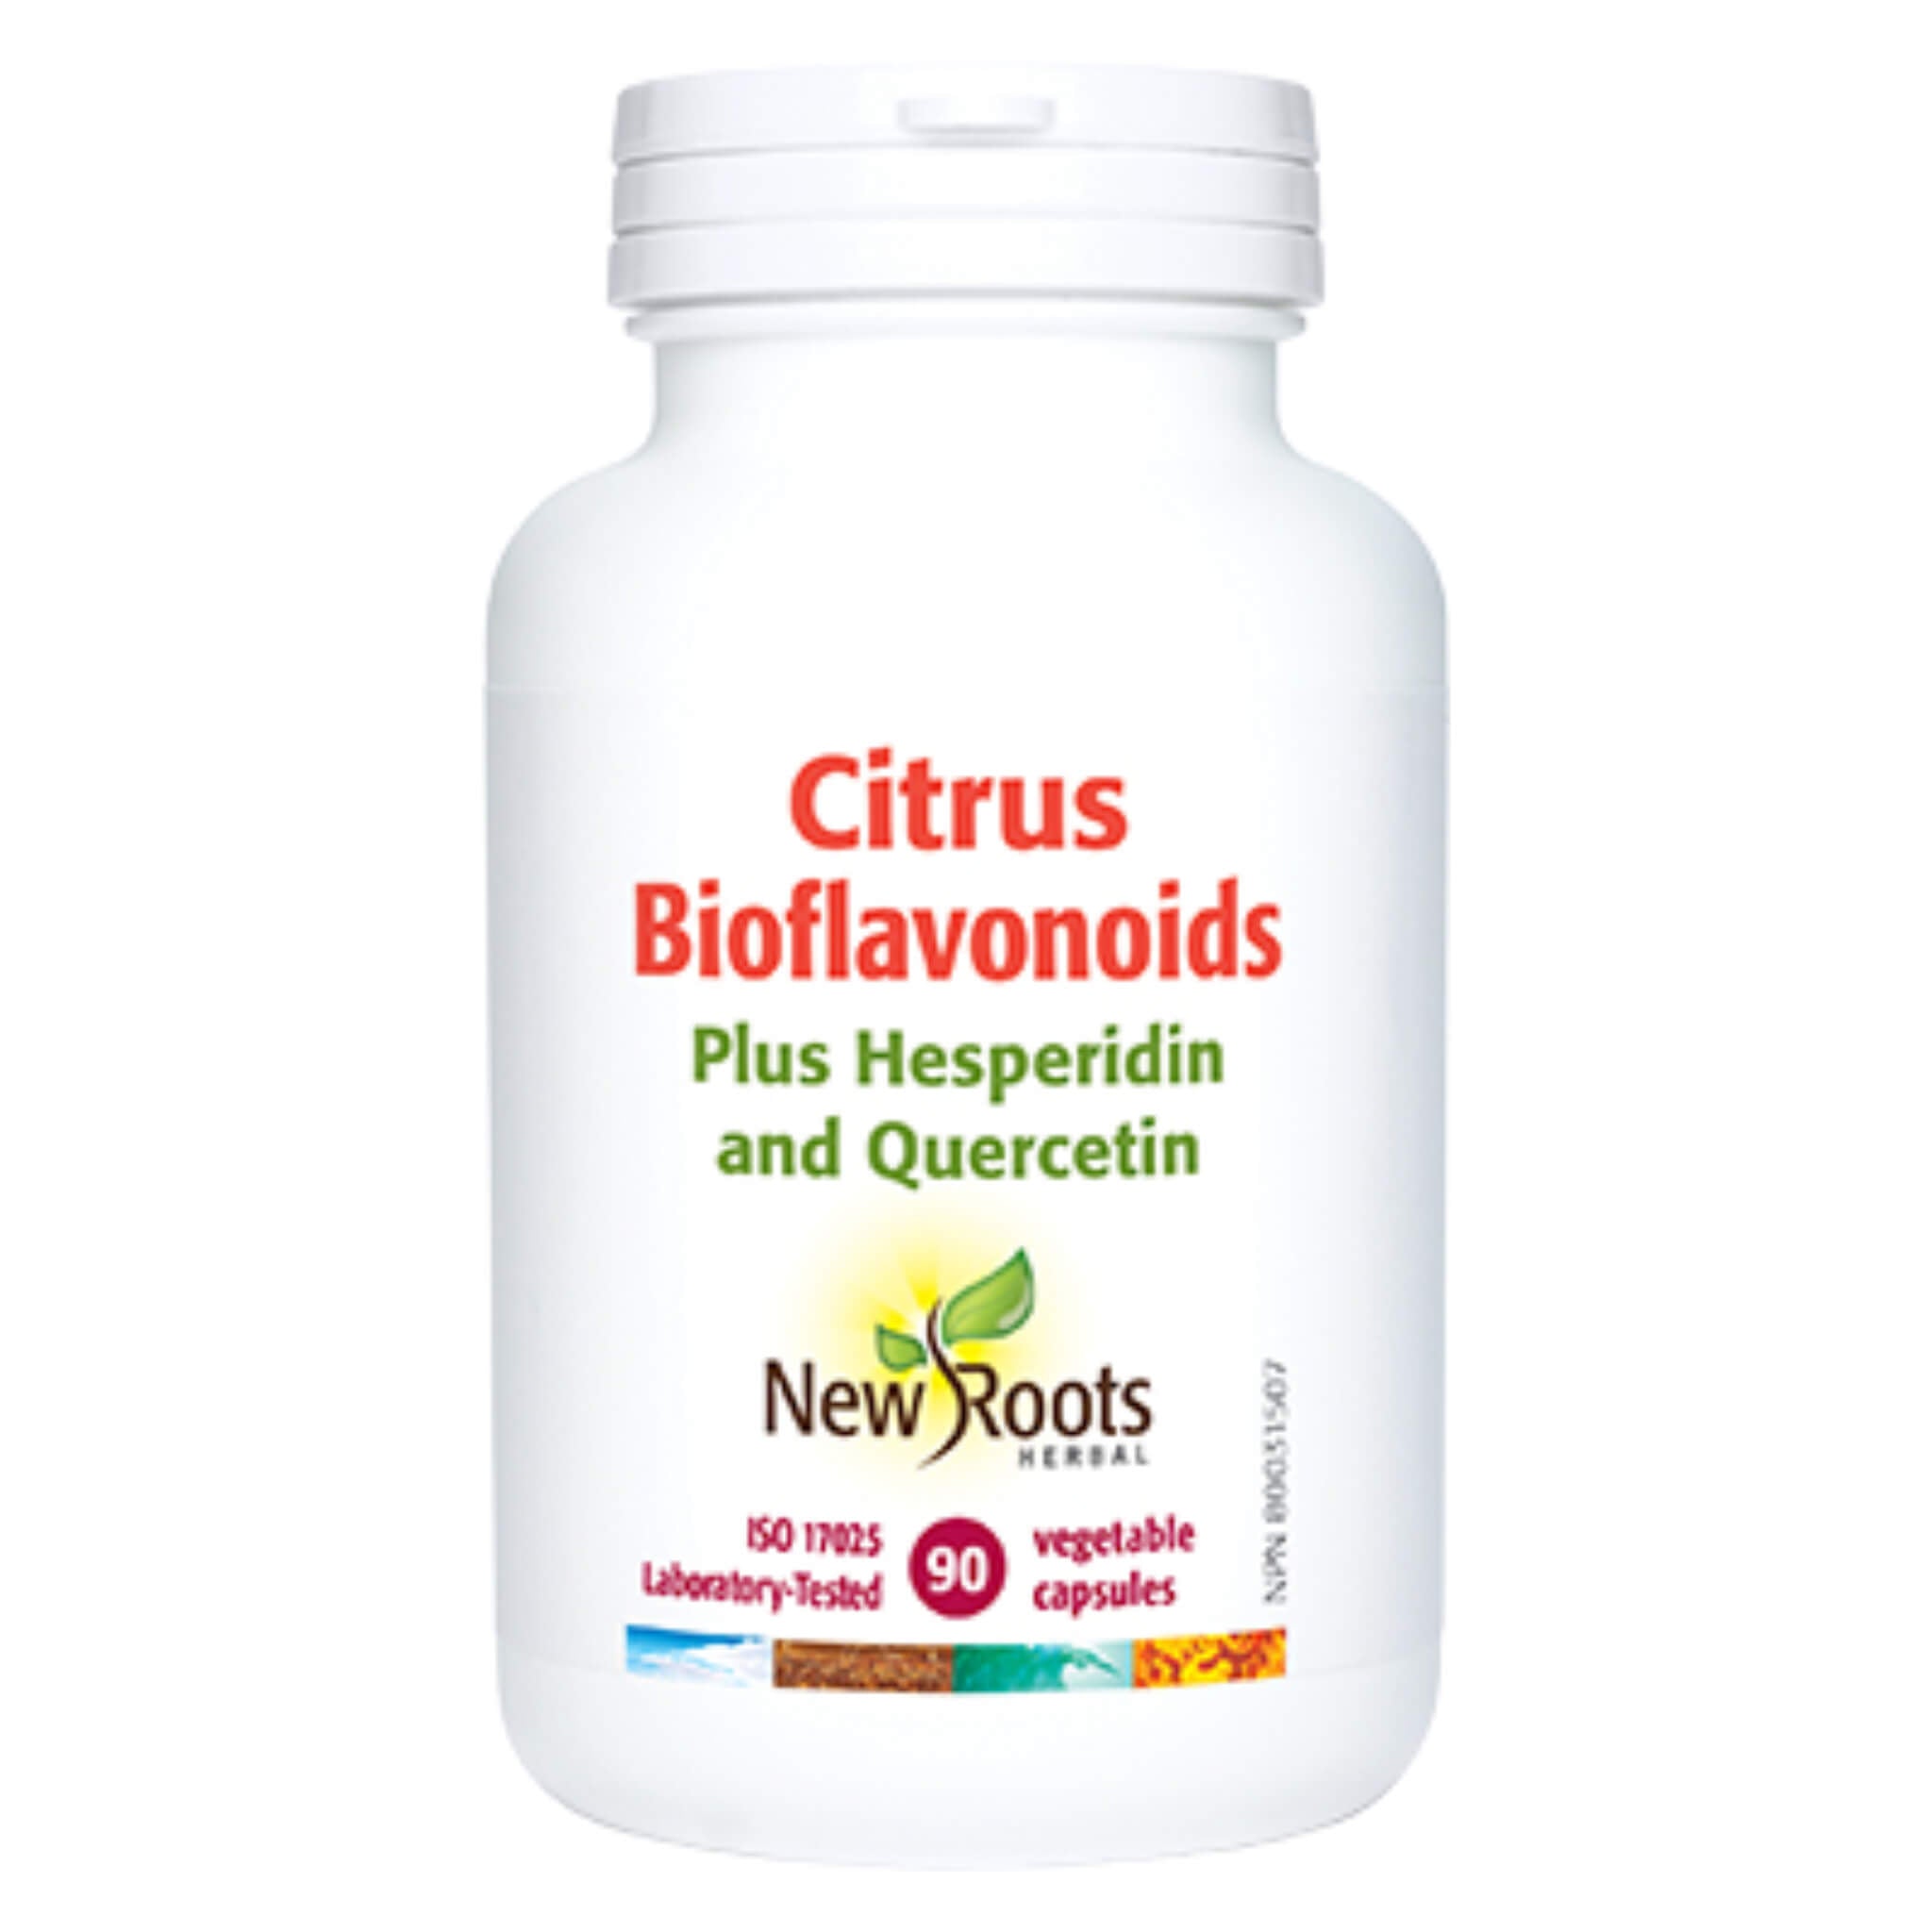 Citrus bioflavonoids for respiratory health